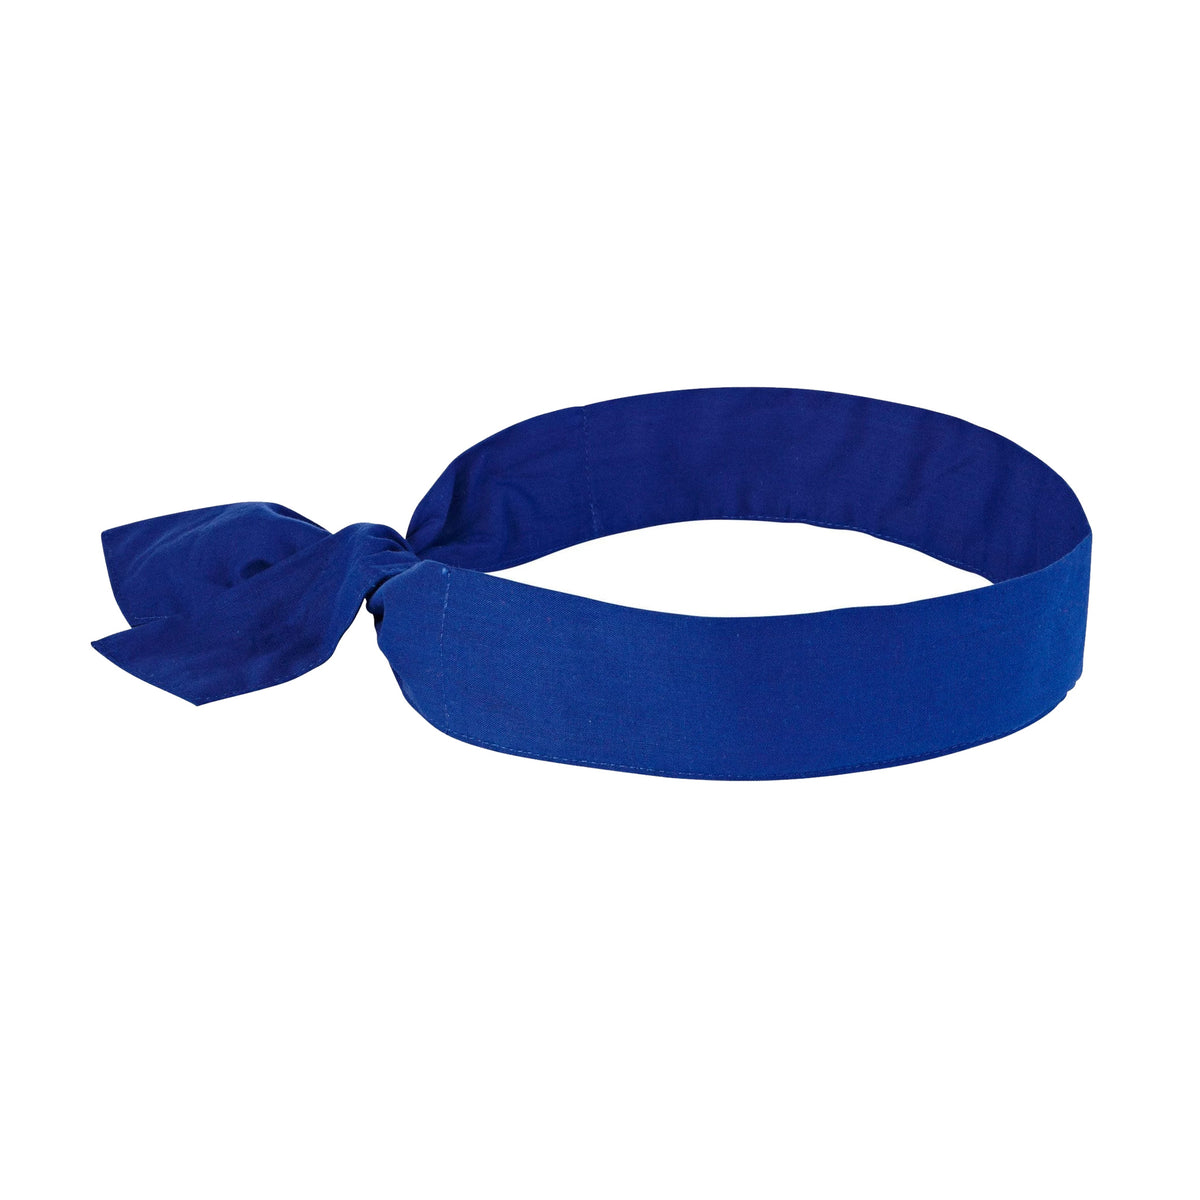 blue evaporative cooling bandana tie close